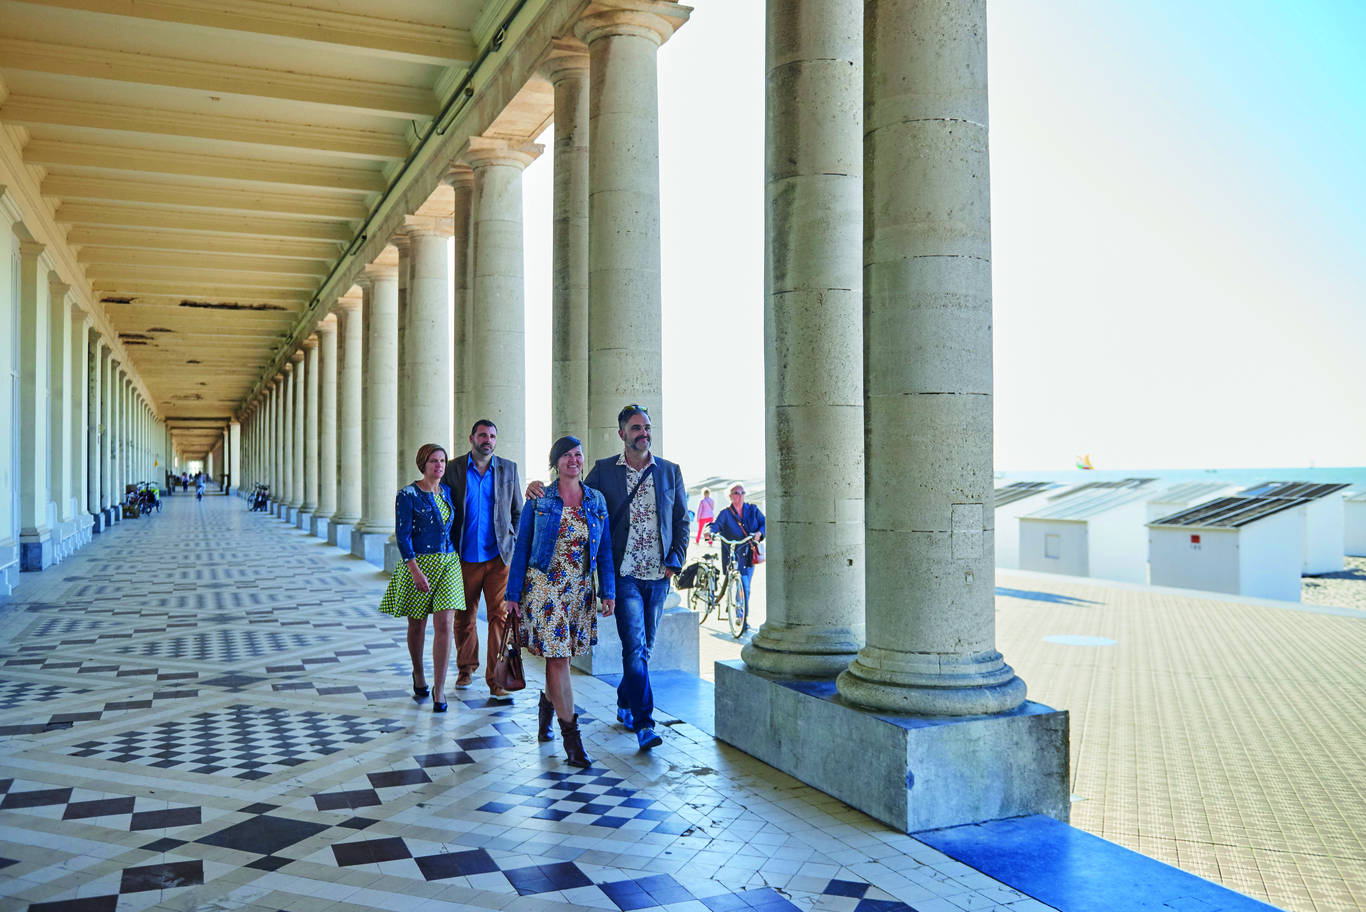 Ostend's marble pillars